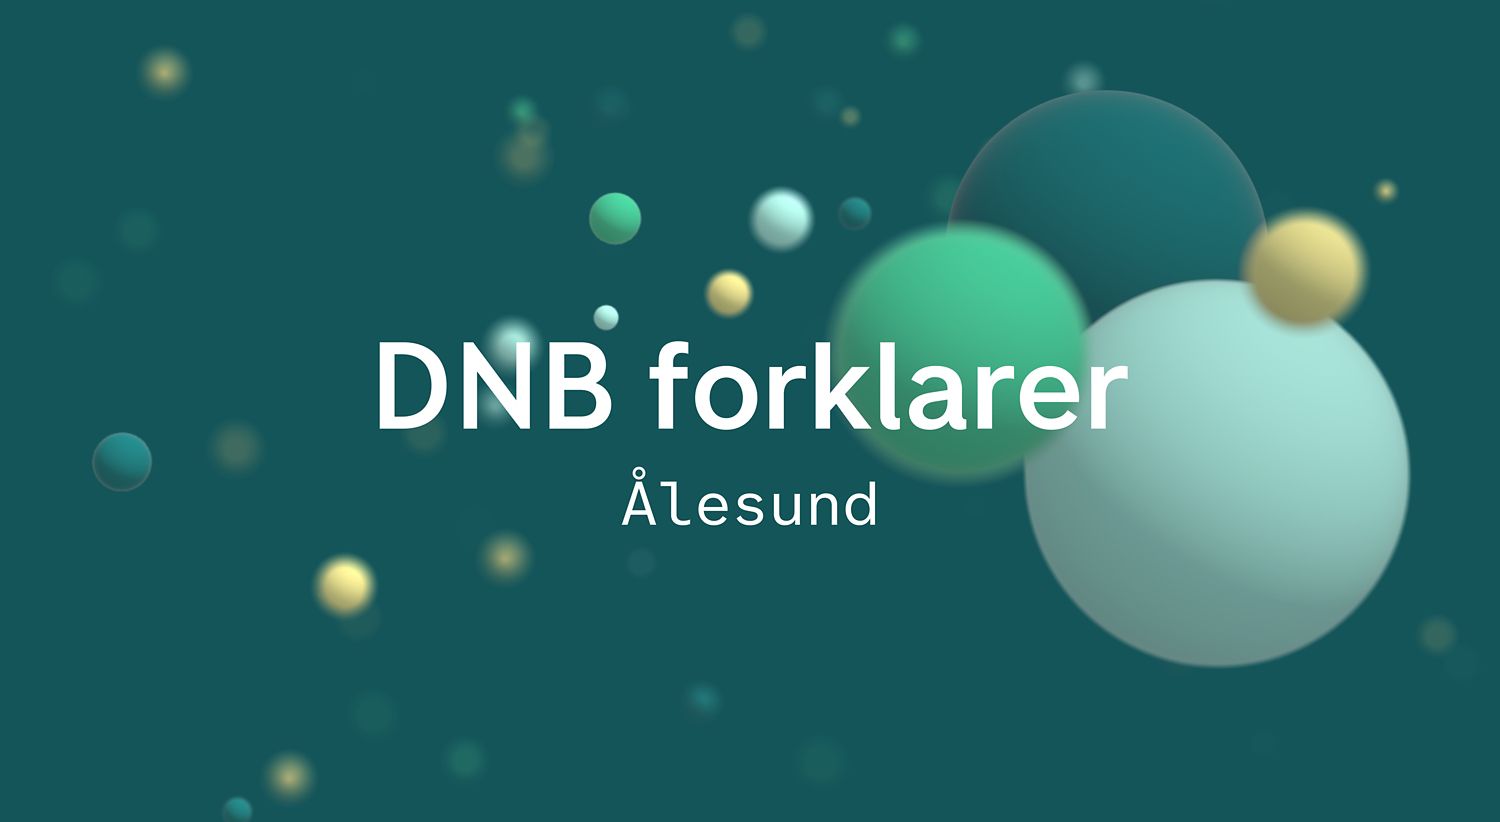 DNB forklarer Ålesund smaragd.jpg